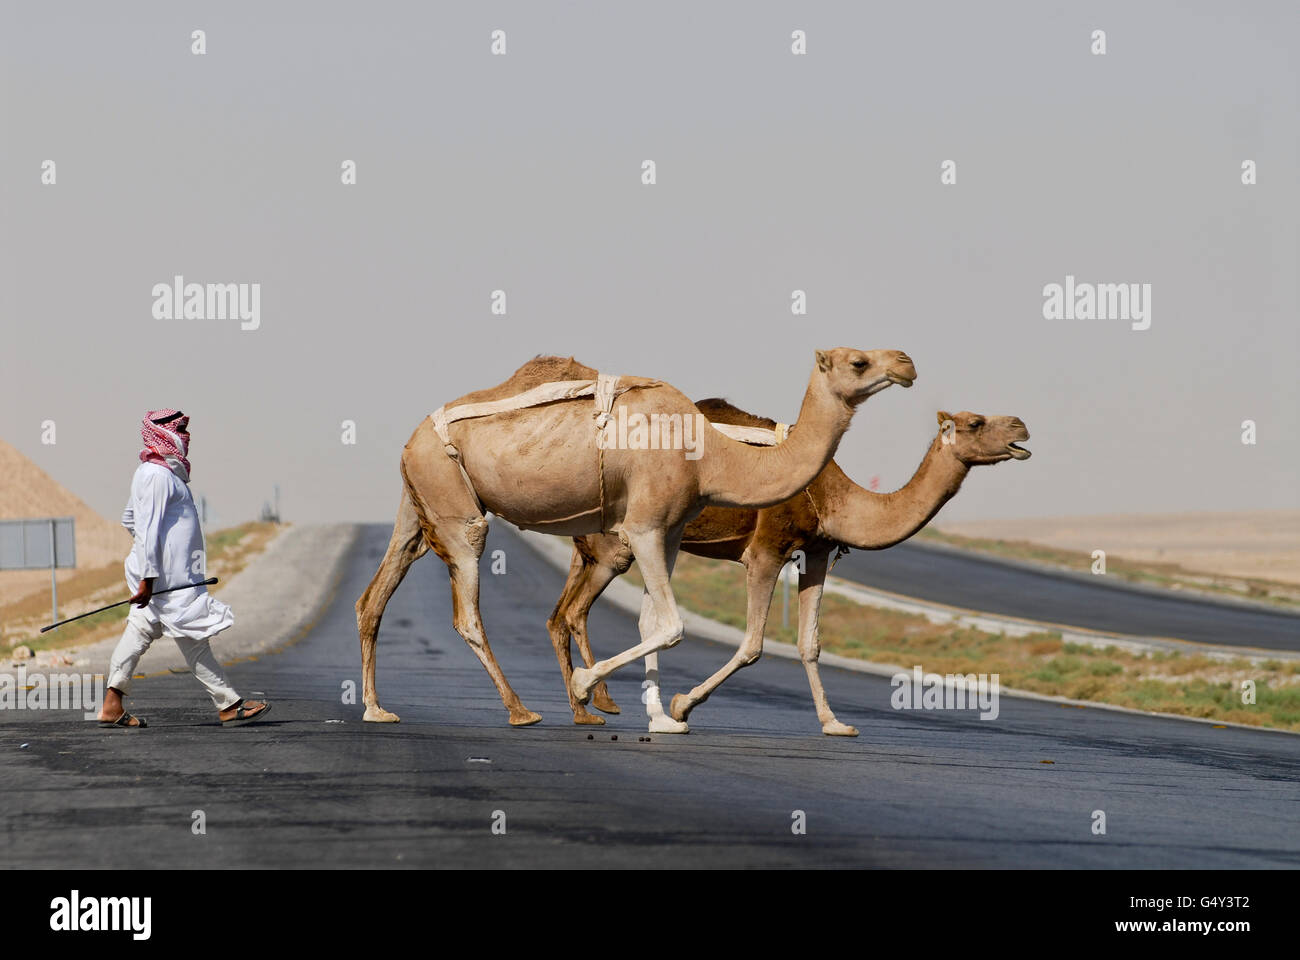 Giordania desert, cammello attraversando la statale per Amman / JORDANIEN, Wueste , Kamele ueberqueren die Autobahn nach Amman Foto Stock